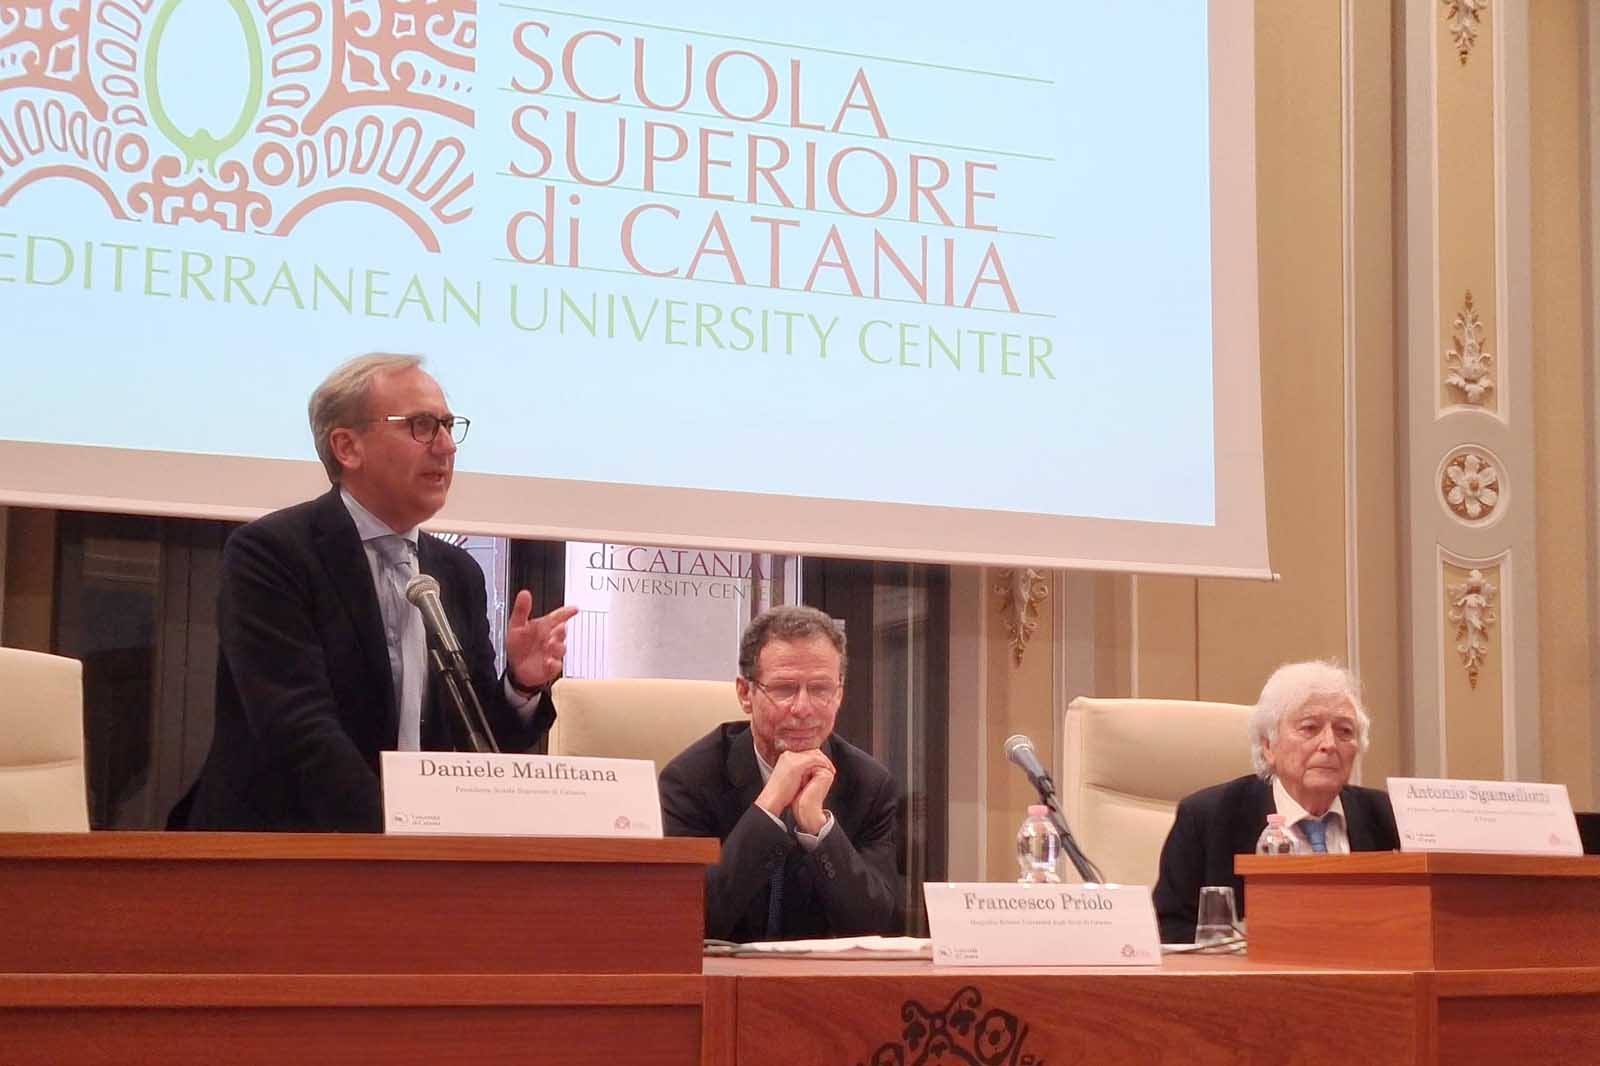 Da sinistra Daniele Malfitana, Francesco Priolo e Antonio Sgamellotti